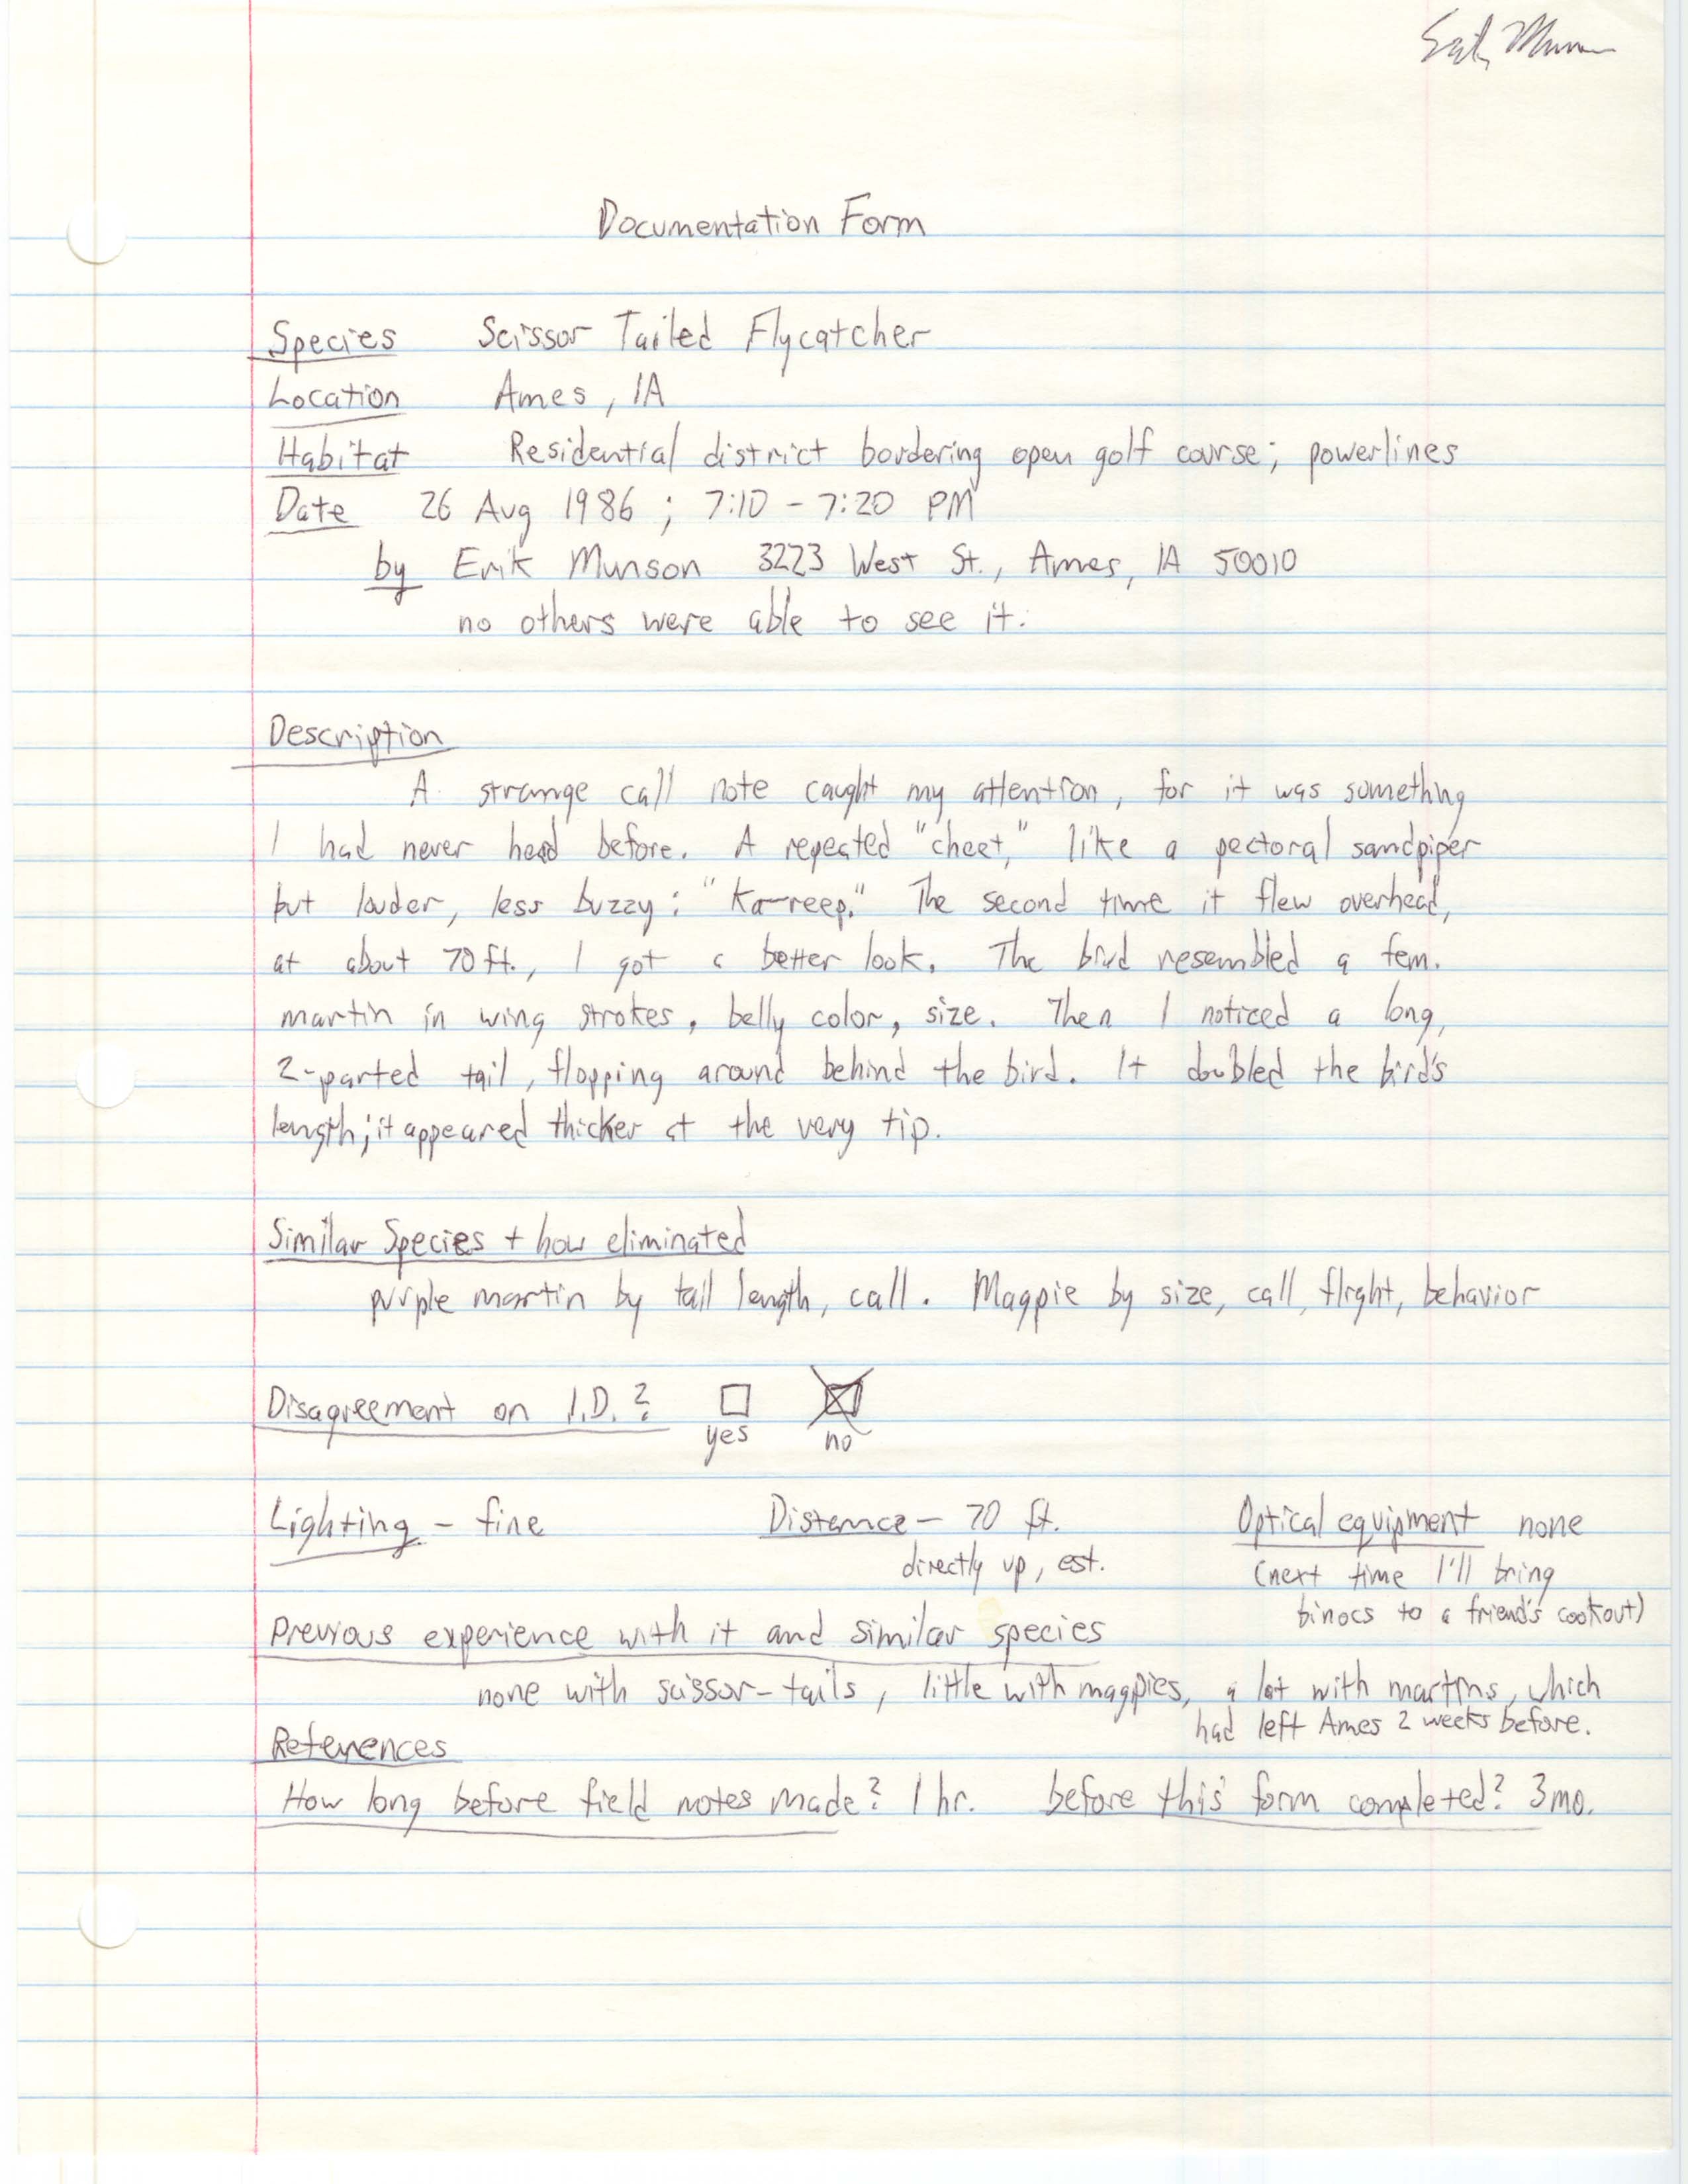 Rare bird documentation form for Scissor-tailed Flycatcher at Ames, 1986